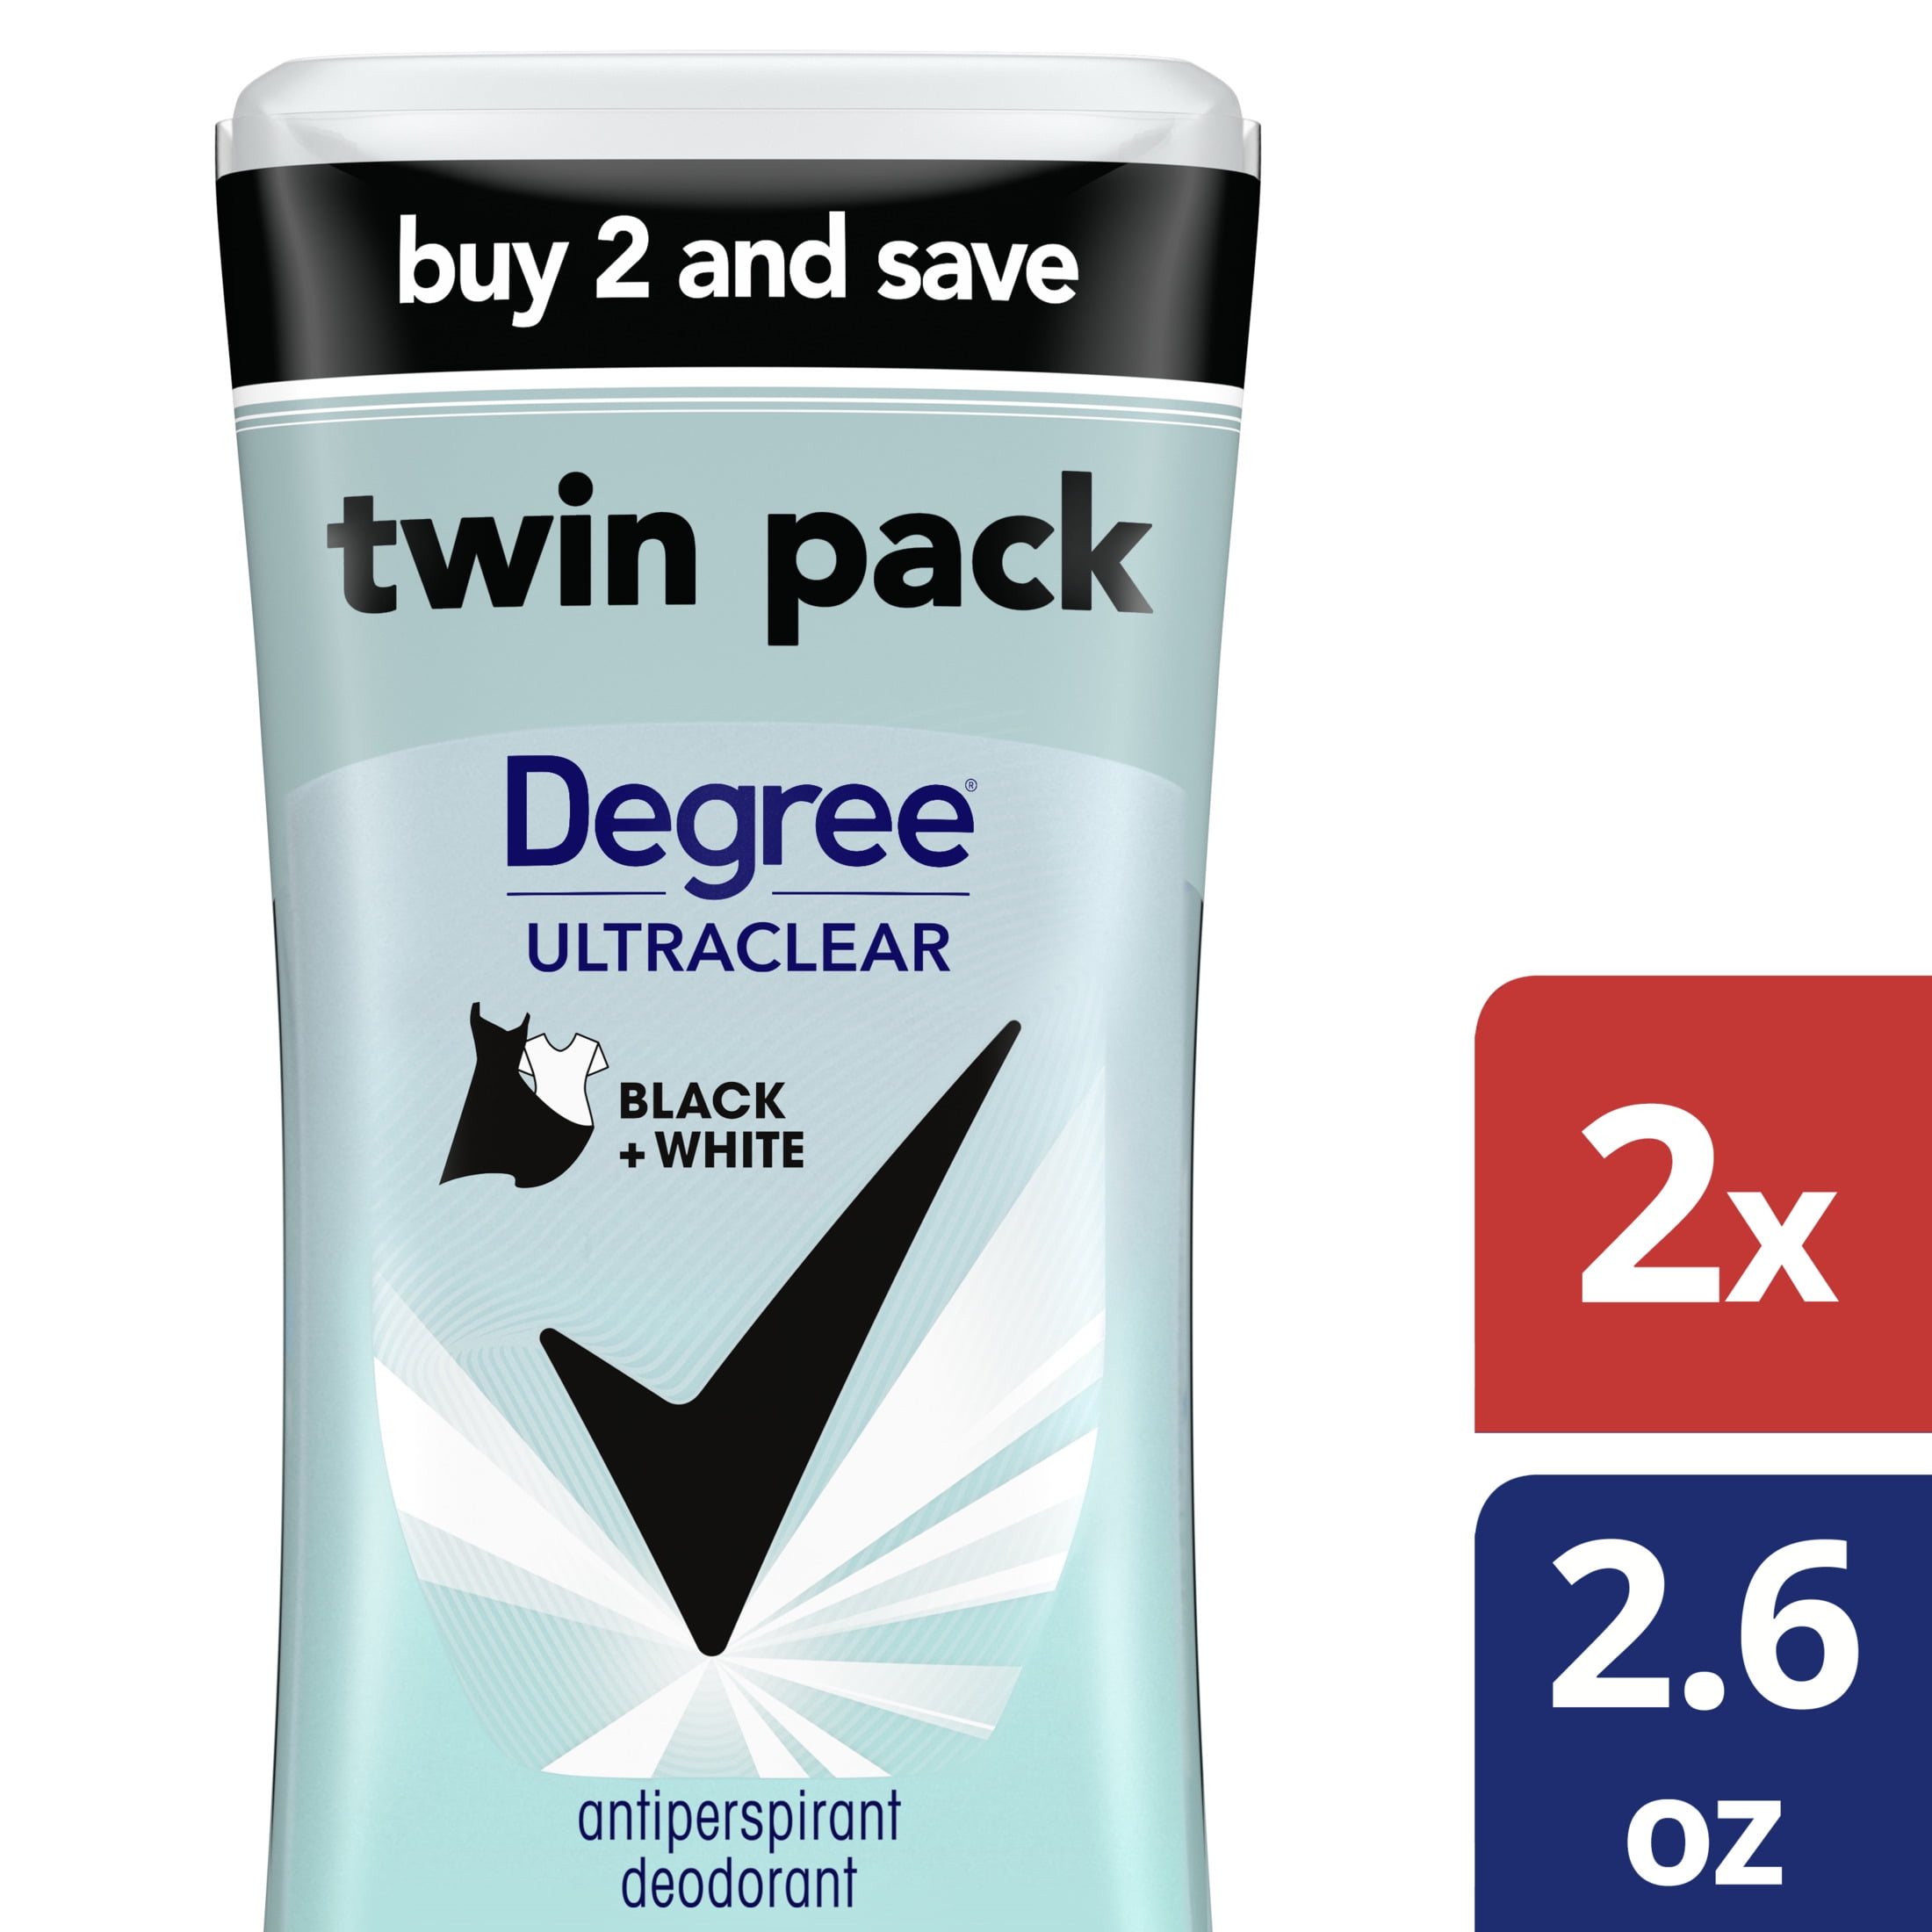 Degree UltraClear Antiperspirant Deodorant Black+White, 2.6 oz, Twin Pack